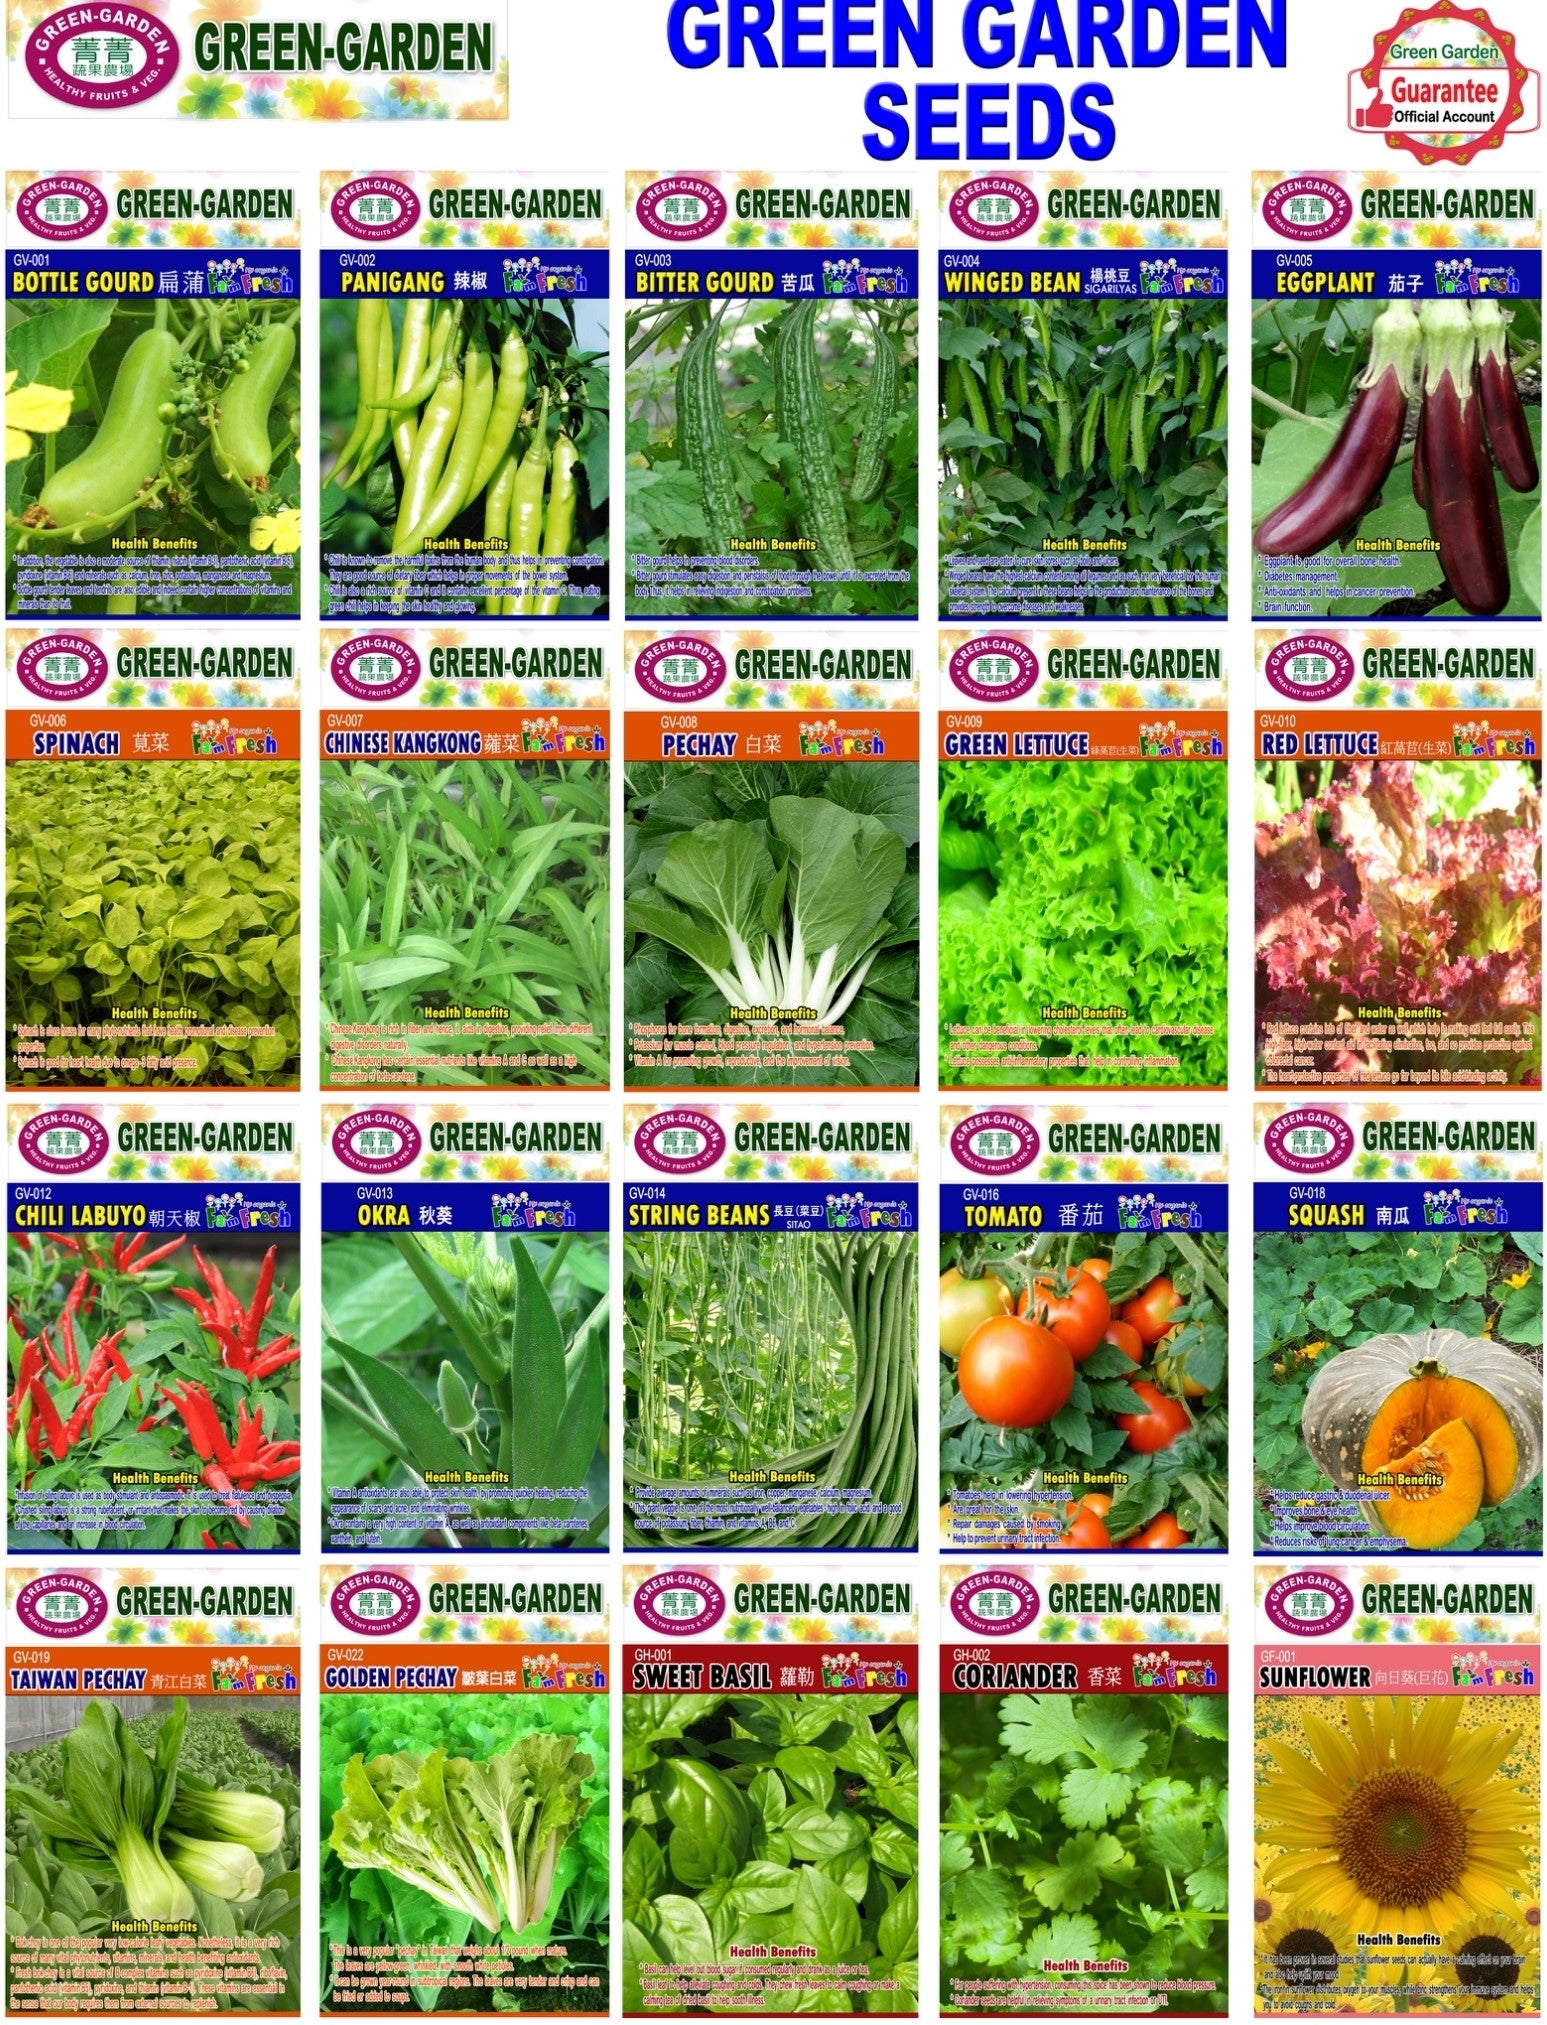 Green Garden Vegetable Seeds (GV-005 Eggplant)